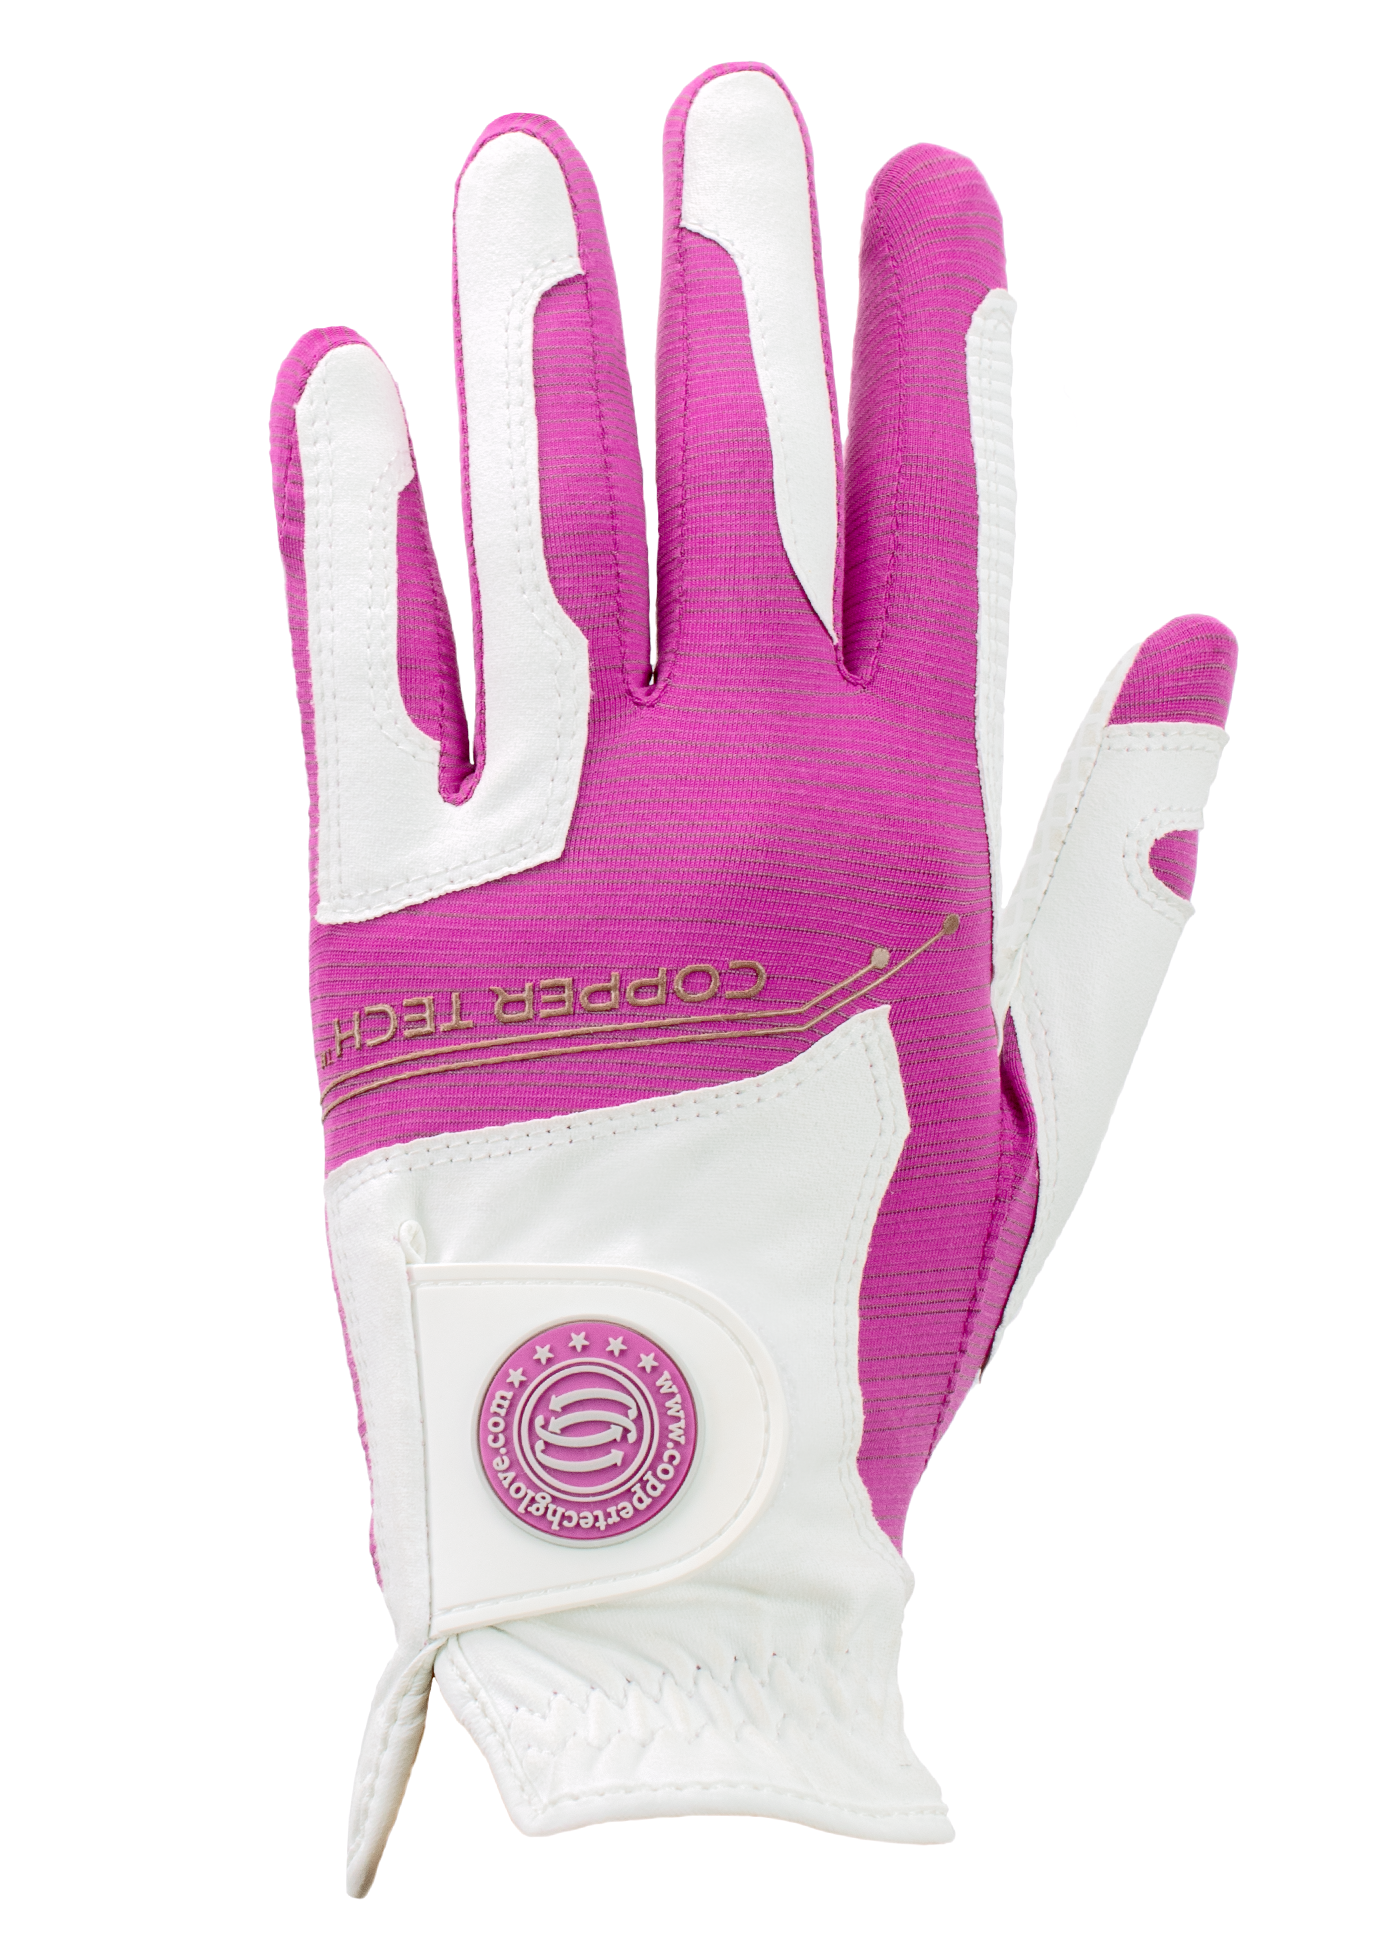 Copper Tech Golf Glove, White/Fuchsia, 2-Pack